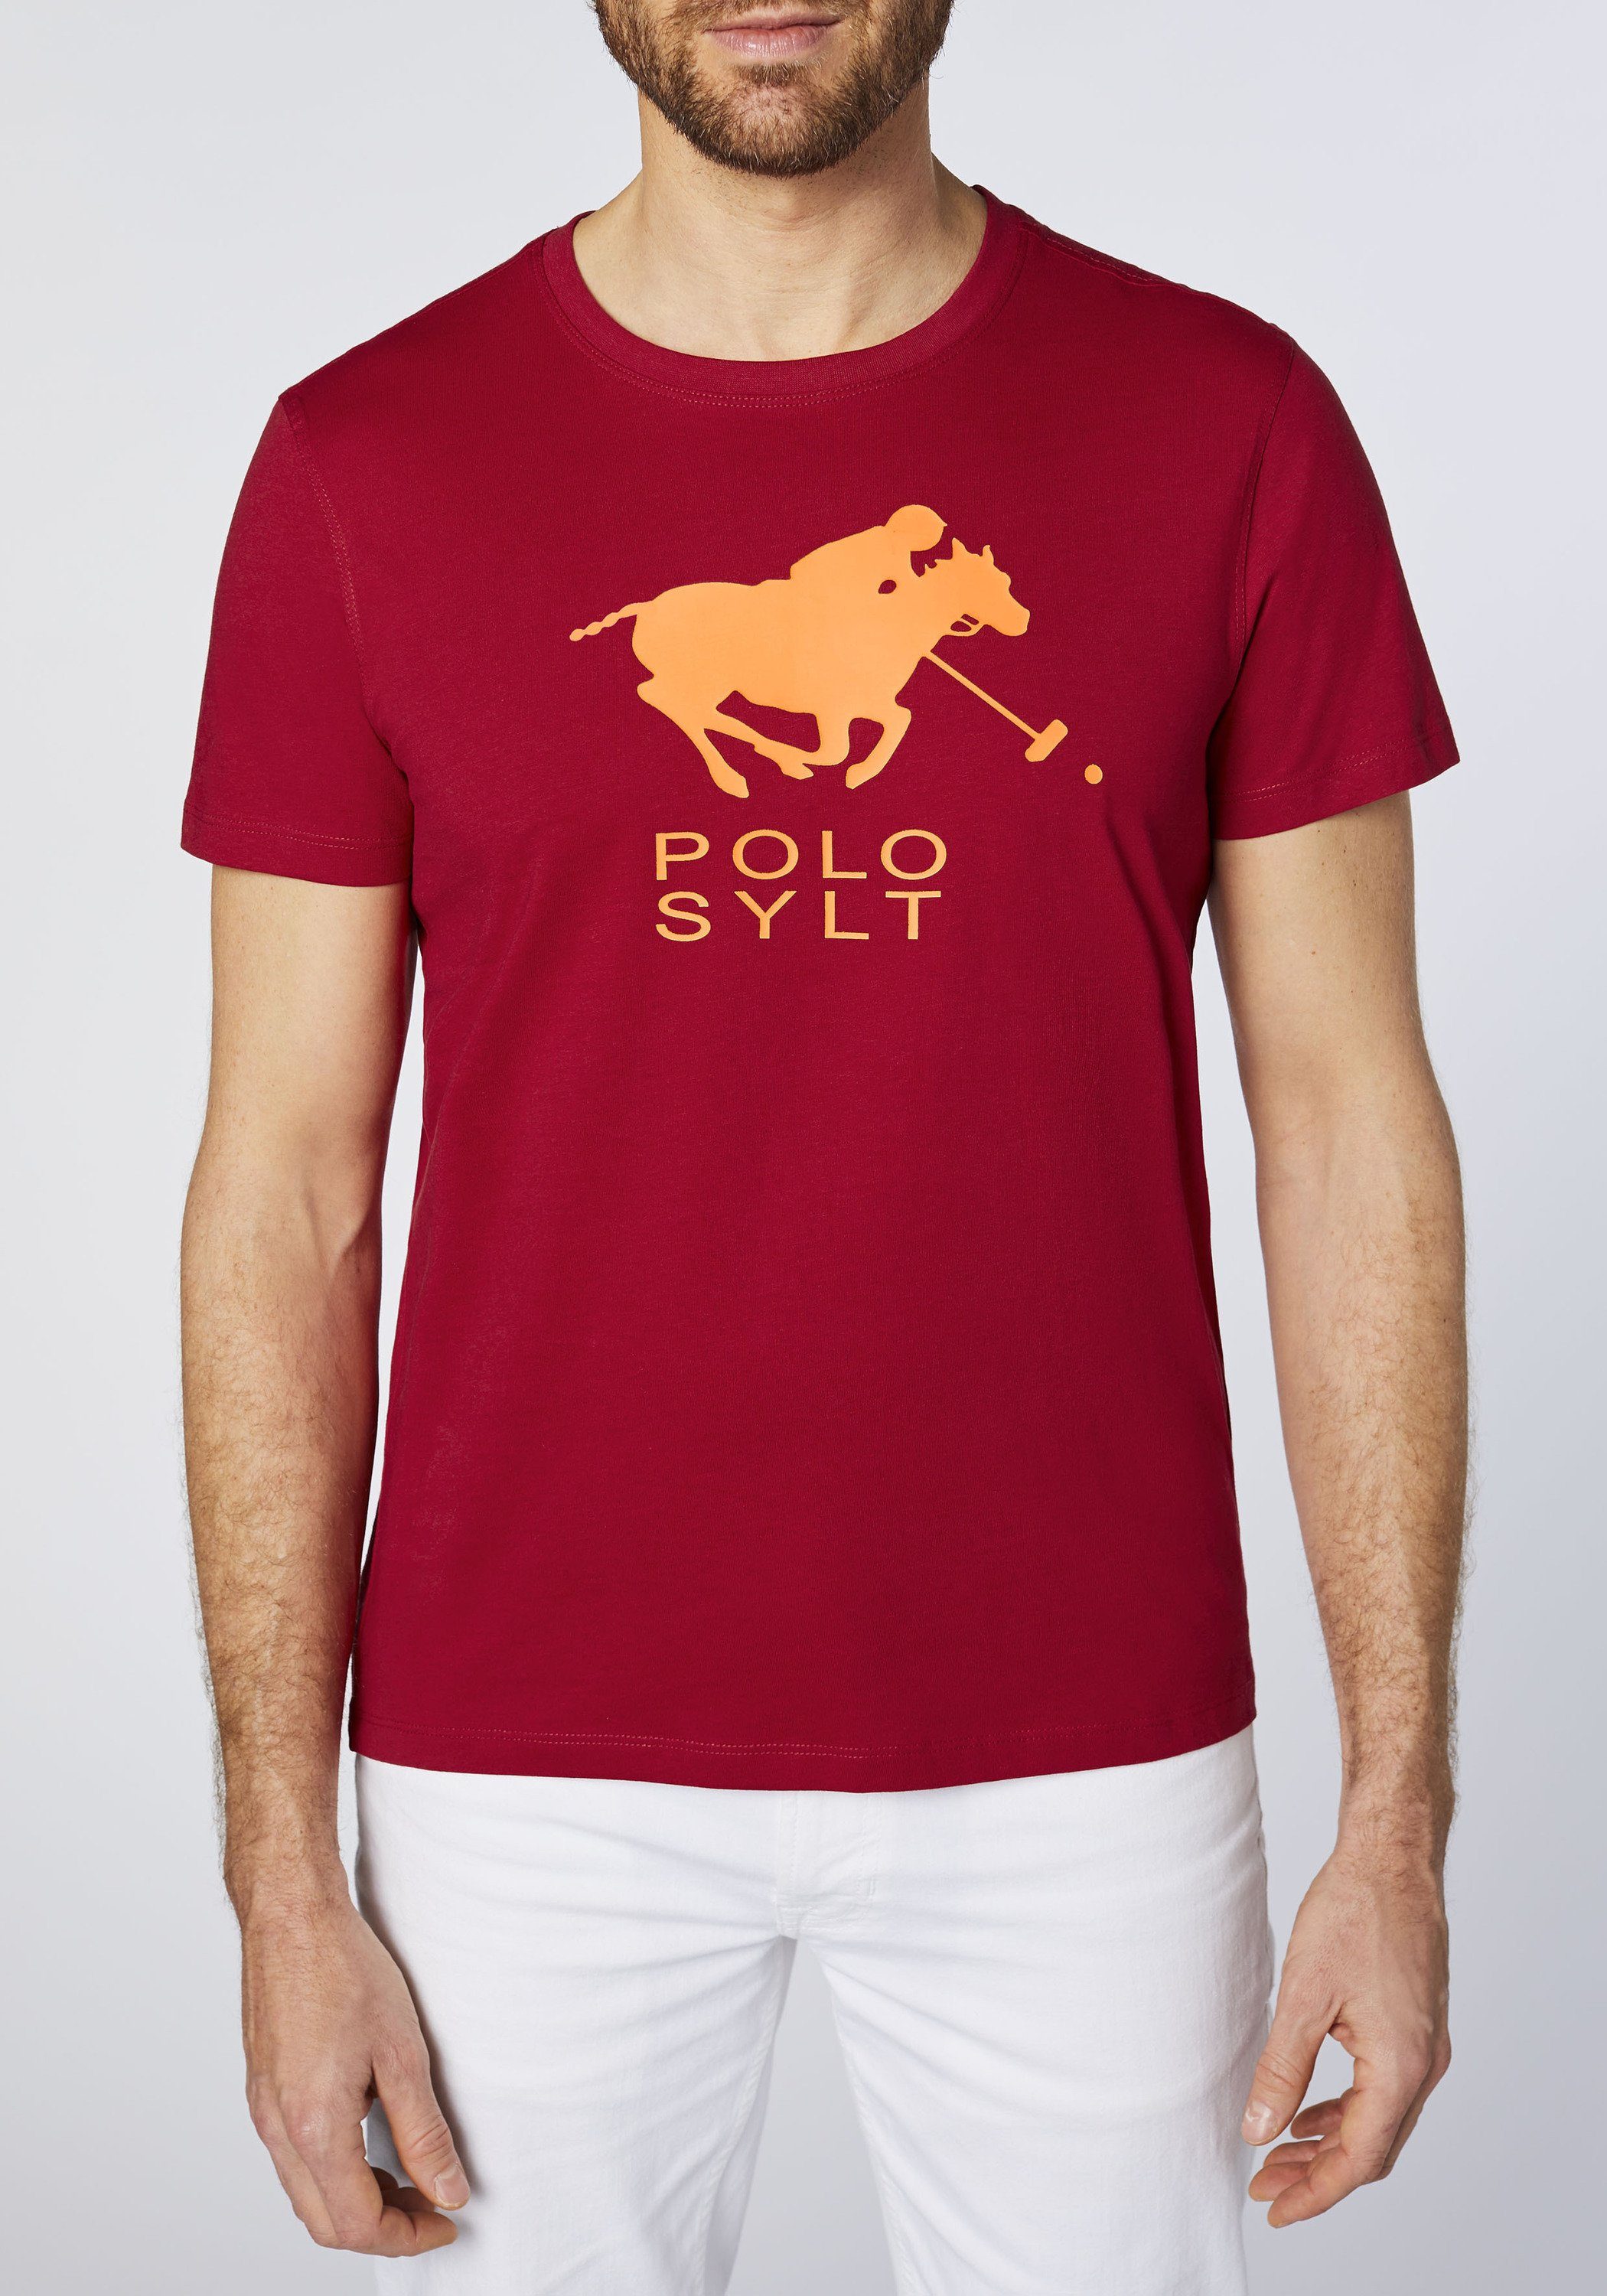 Logo Sylt Print-Shirt Neon Polo Pepper Chili Frontprint mit